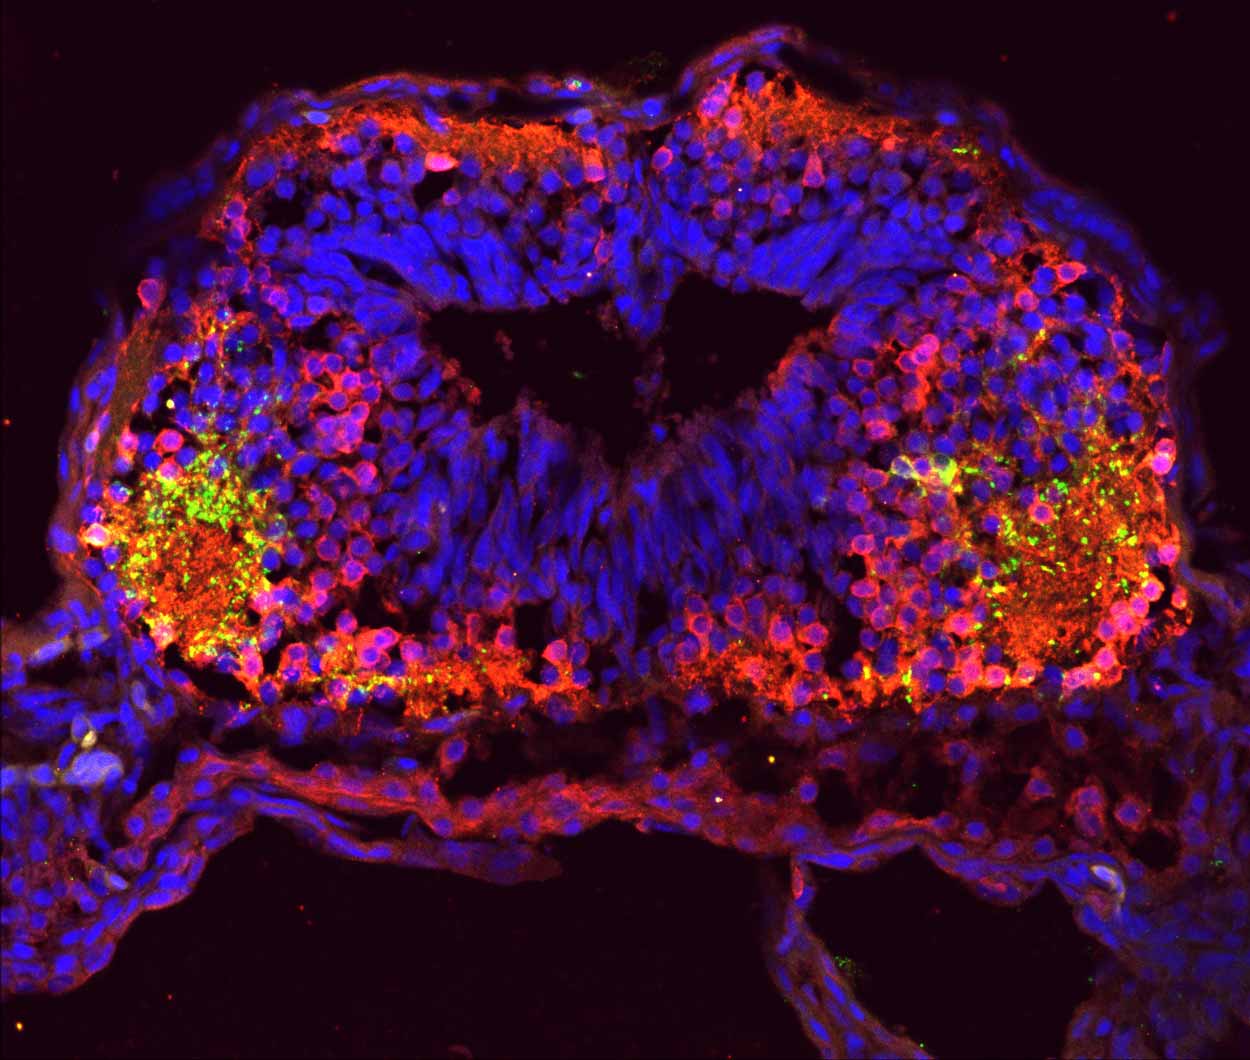 fluorescent image of tadpole brain cross-section